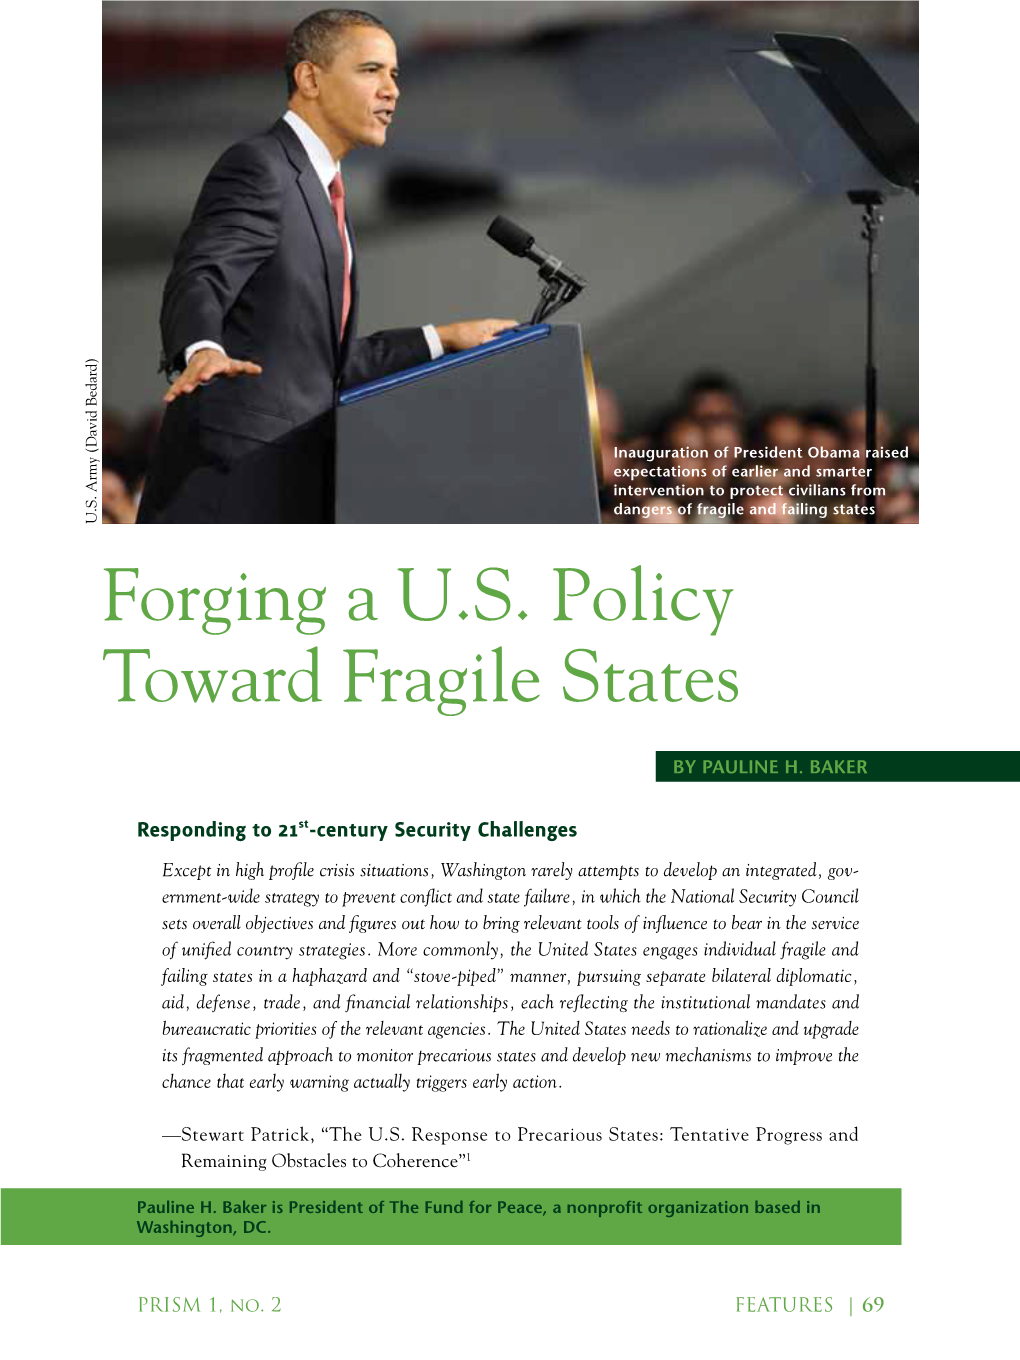 Forging a U.S. Policy Toward Fragile States